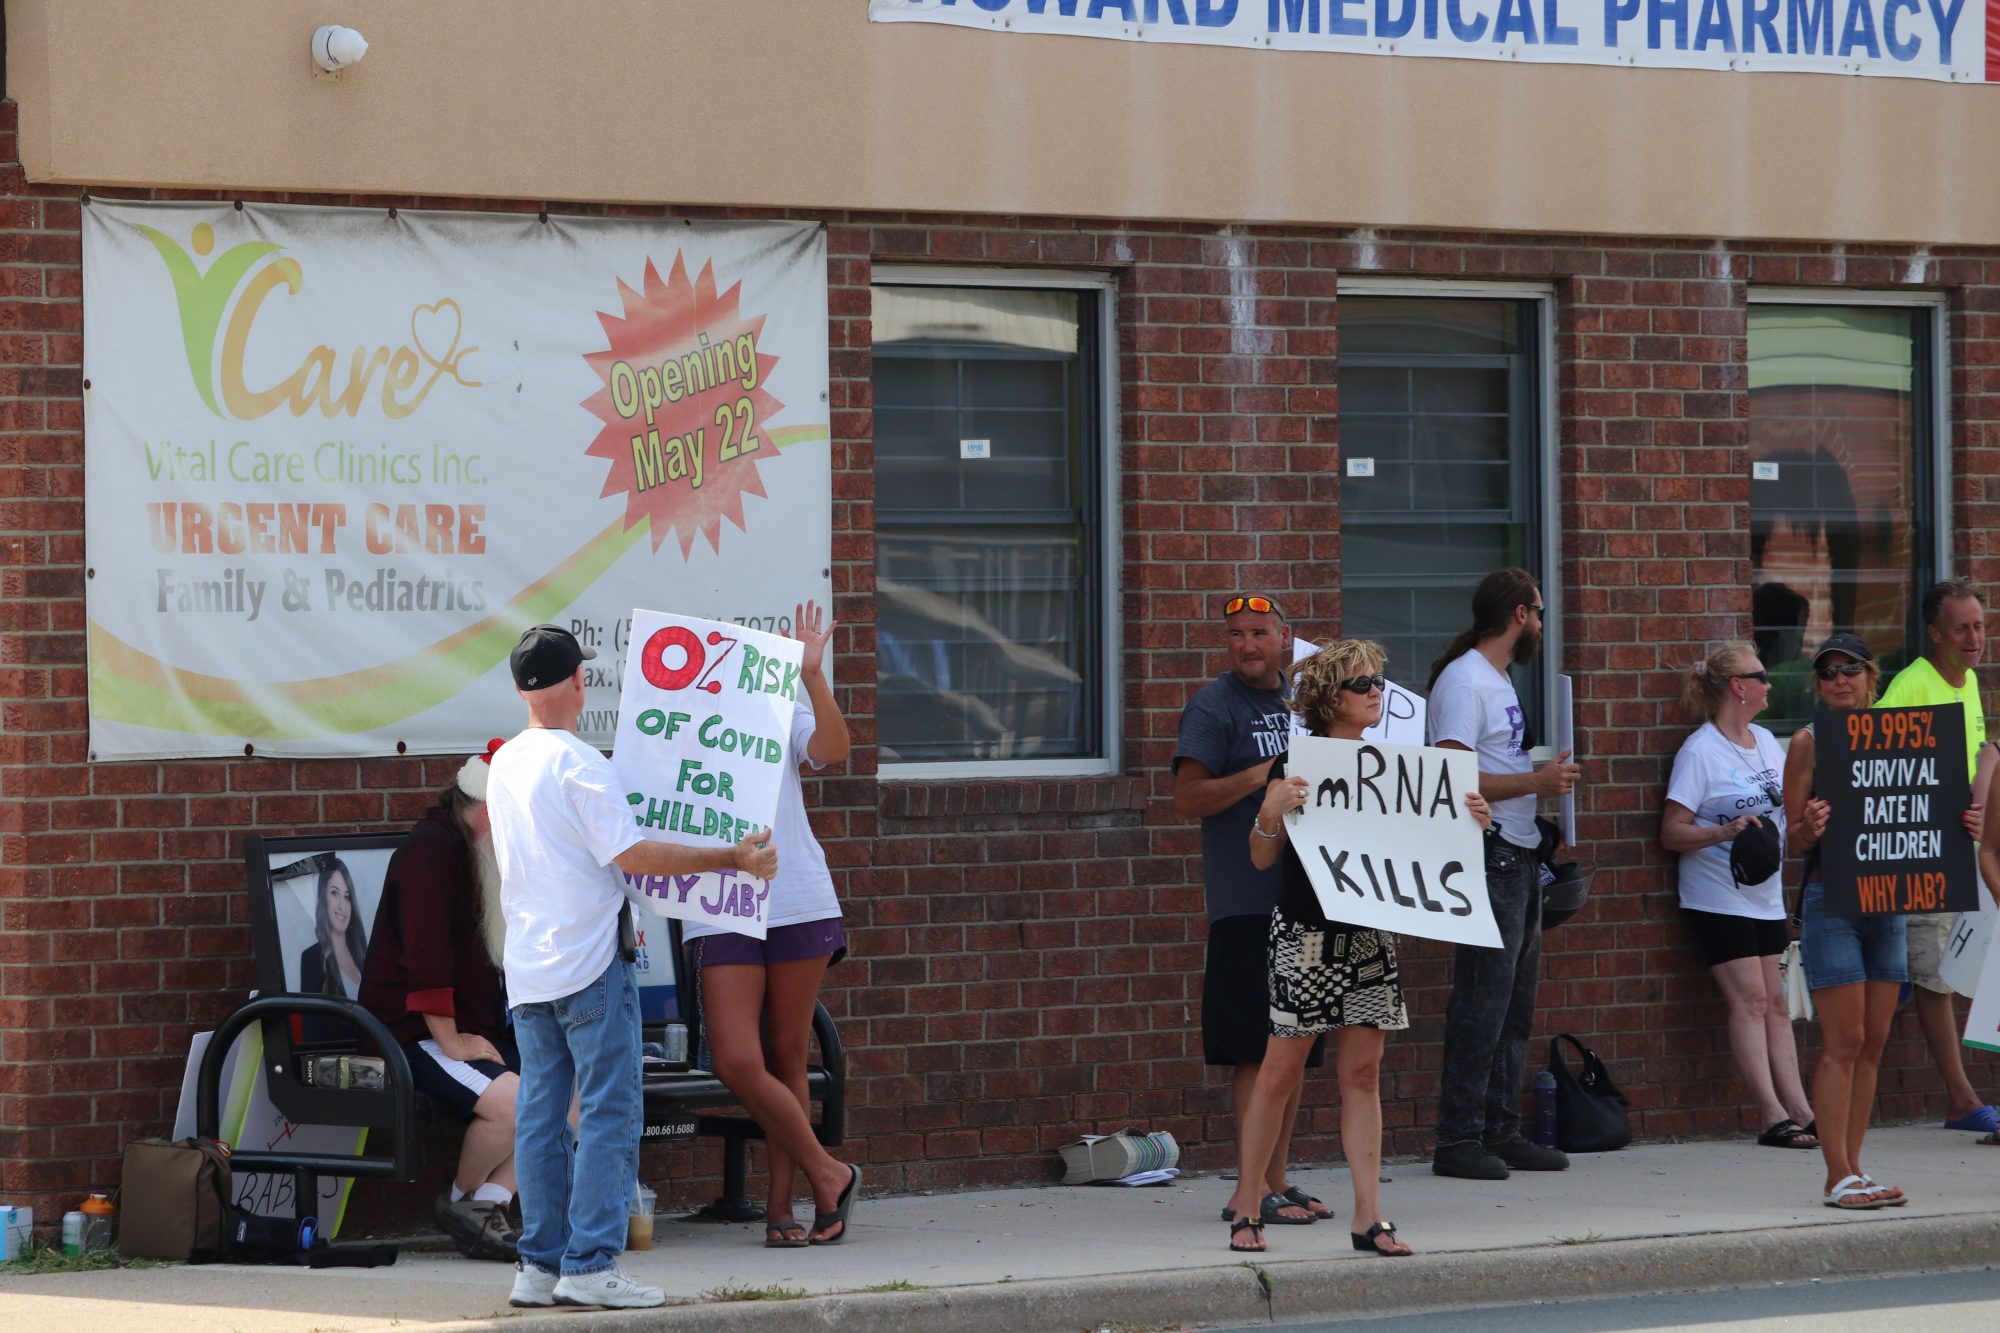 Anti-vaxxers protesting outside medical pharmacy in U.S.